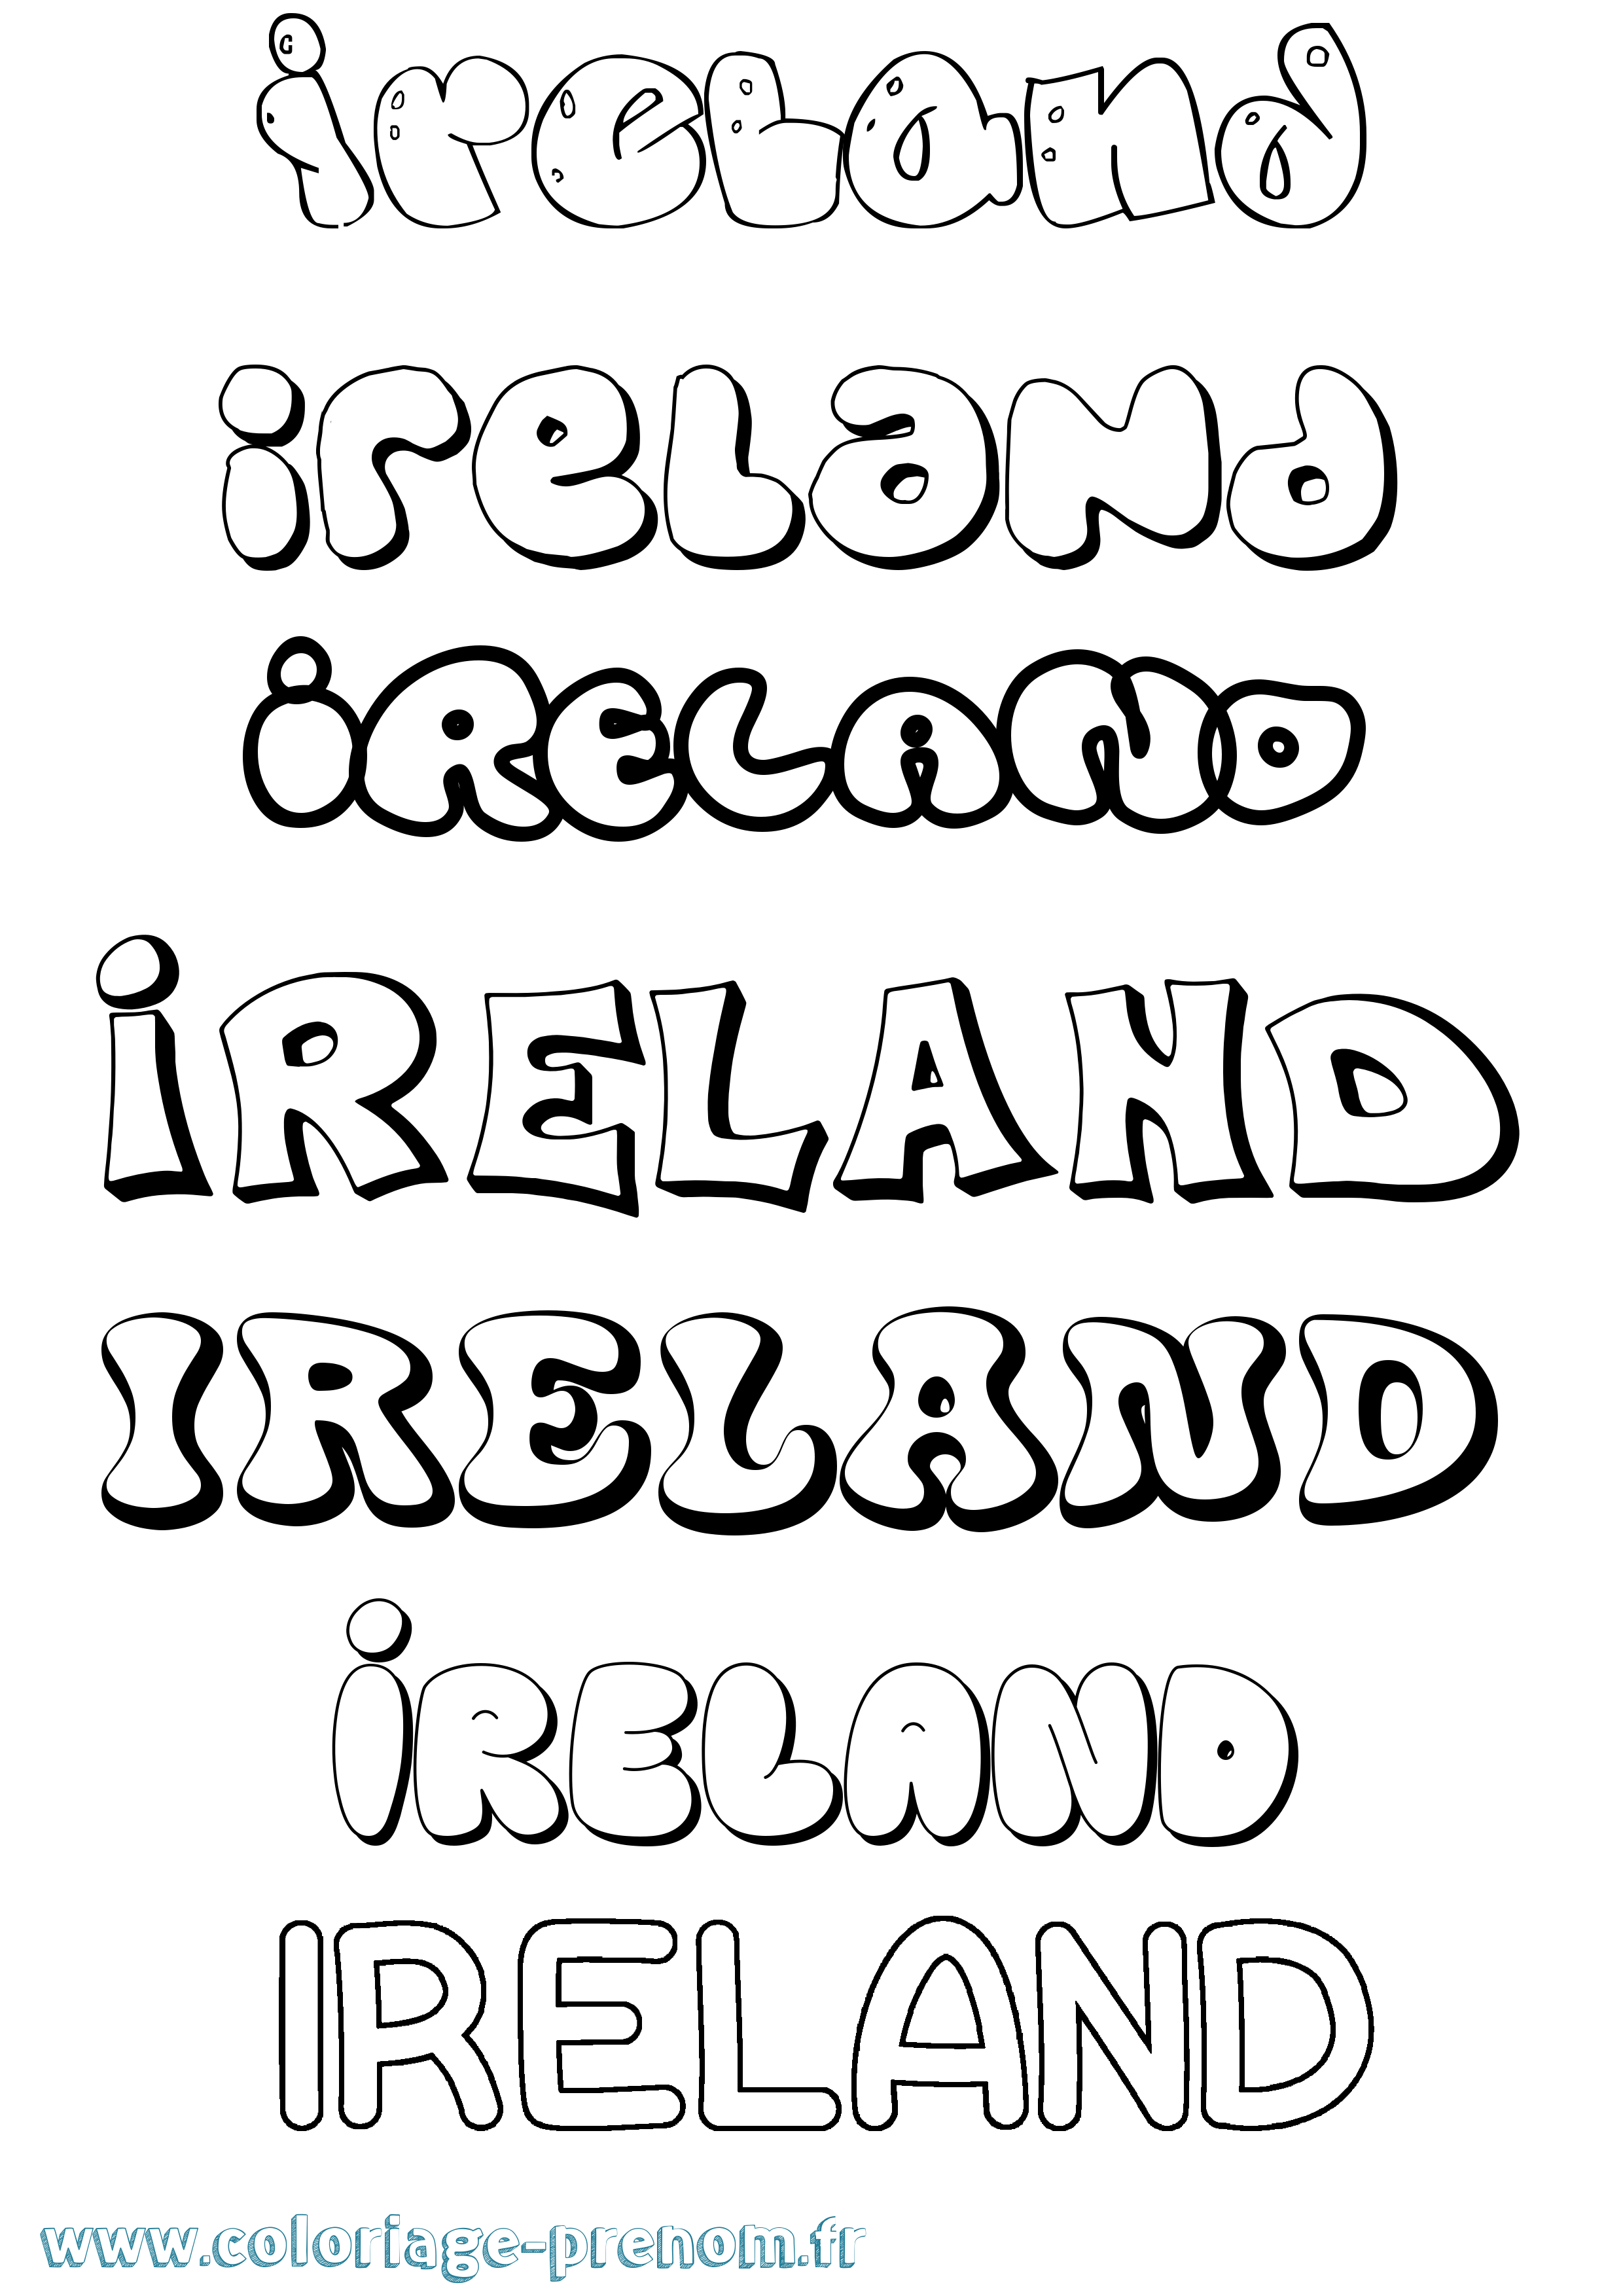 Coloriage prénom Ireland Bubble